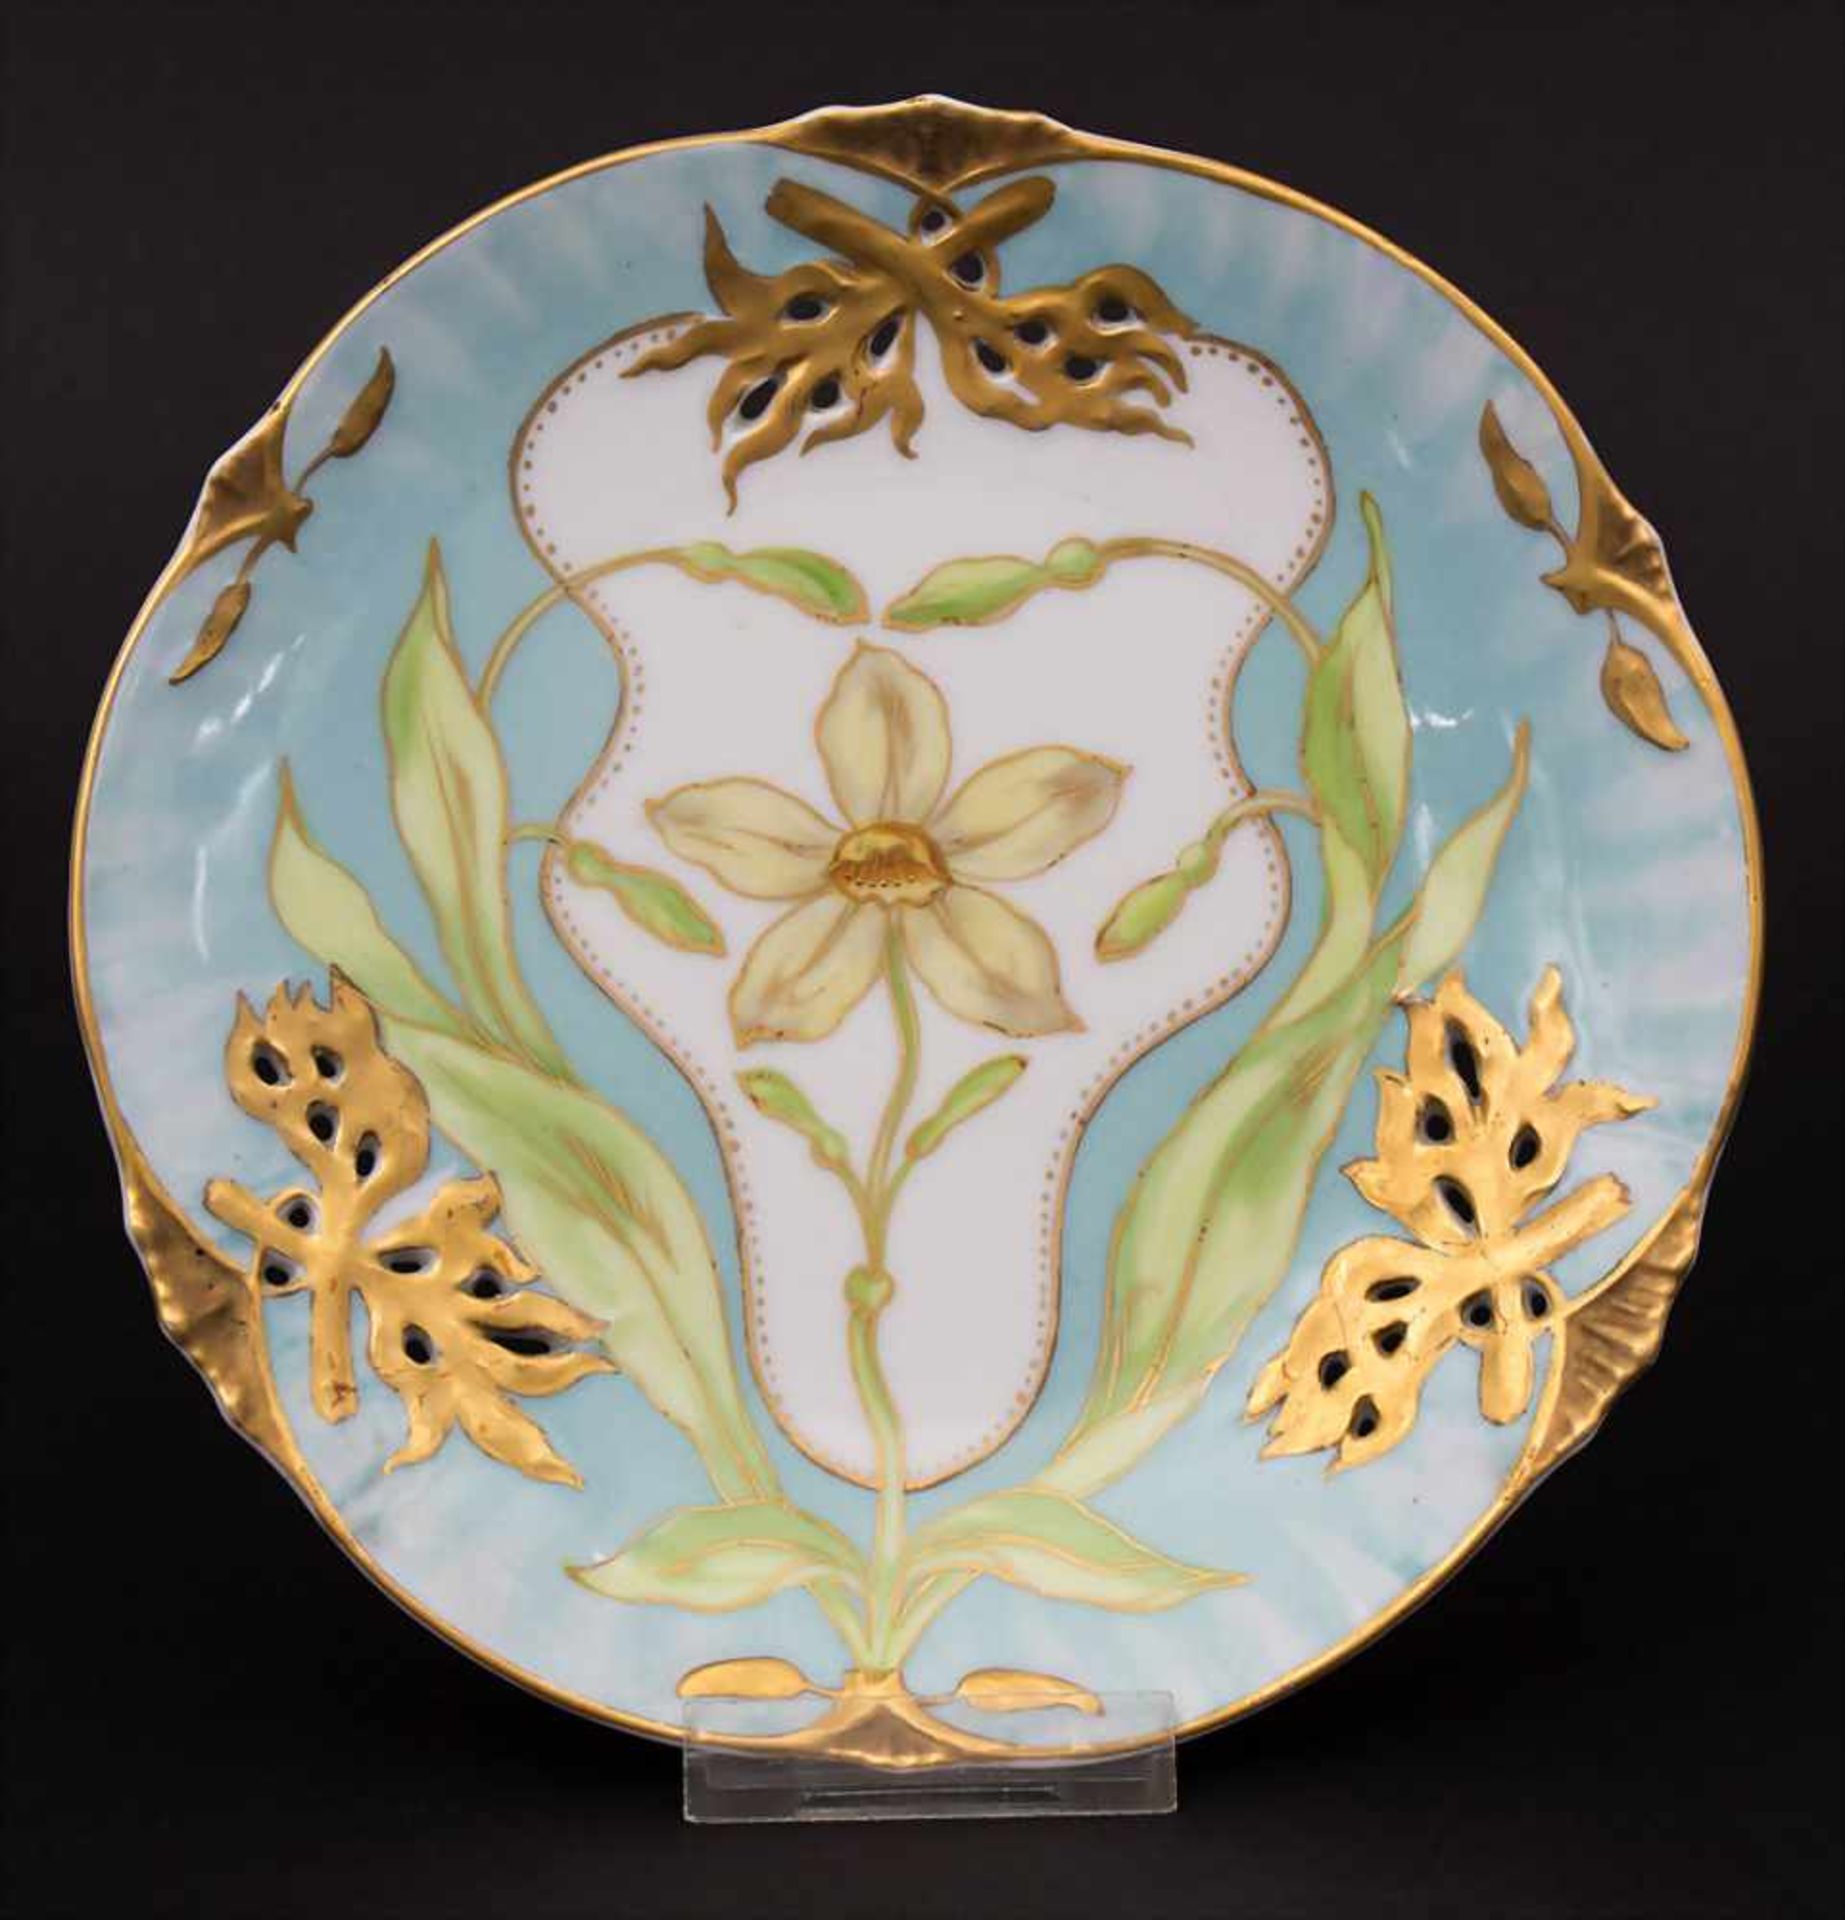 Jugendstil Teller mit Narzissen / An Art Nouveau plate with daffodils, Nymphenburg, um 1900Material: